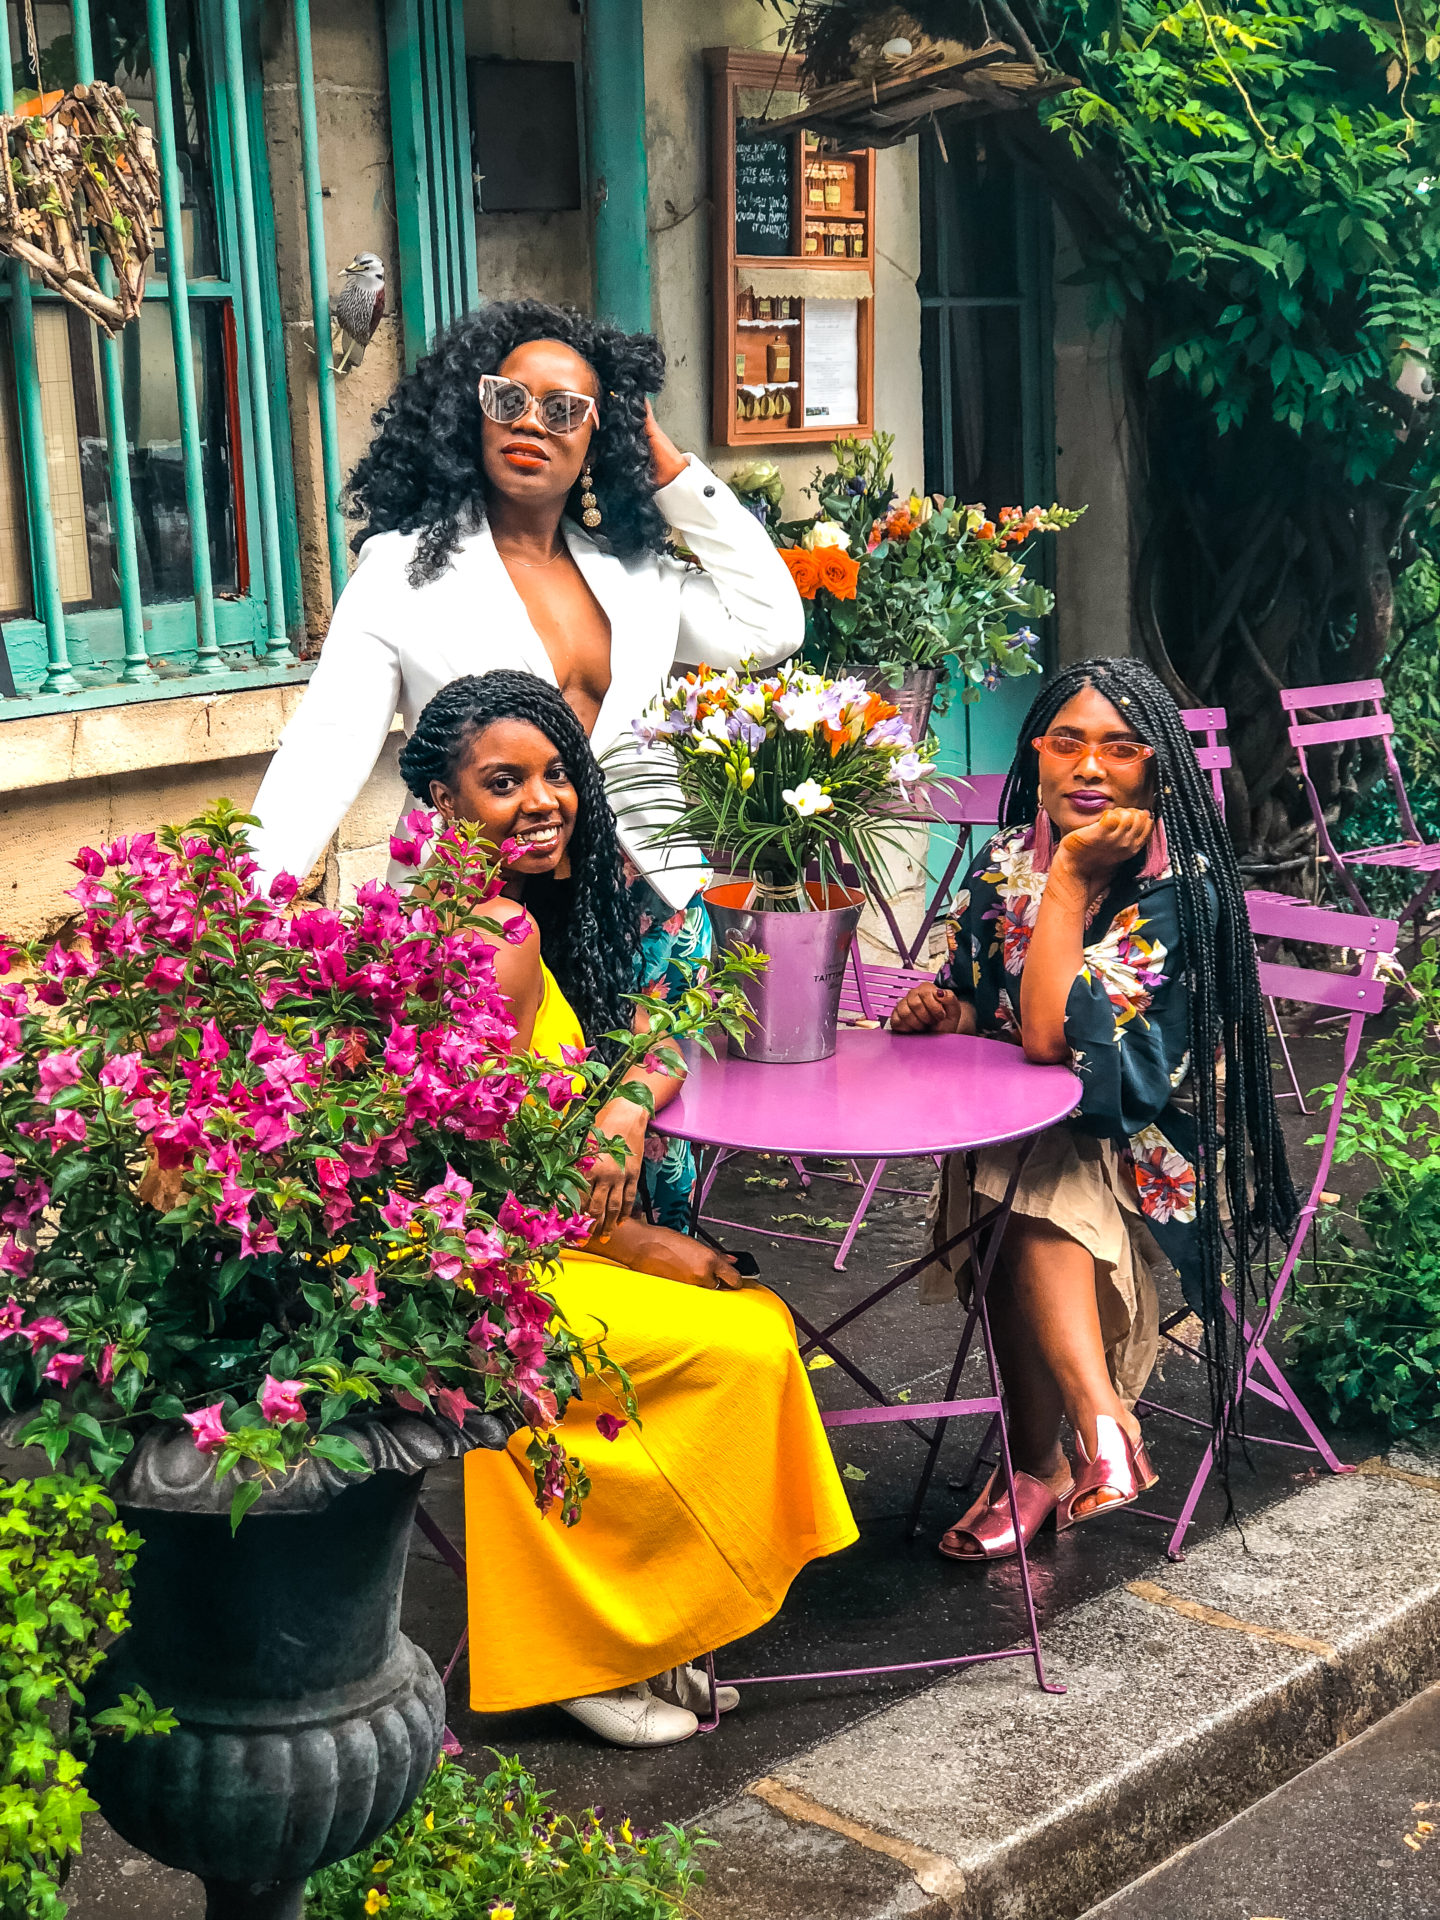 African, African Blogger, Boston Blogger, France, Paris, Africancocktail, African cocktail, Au Vieux D’arcole, Cafe, Paris Instagrammable Spots, Instagram